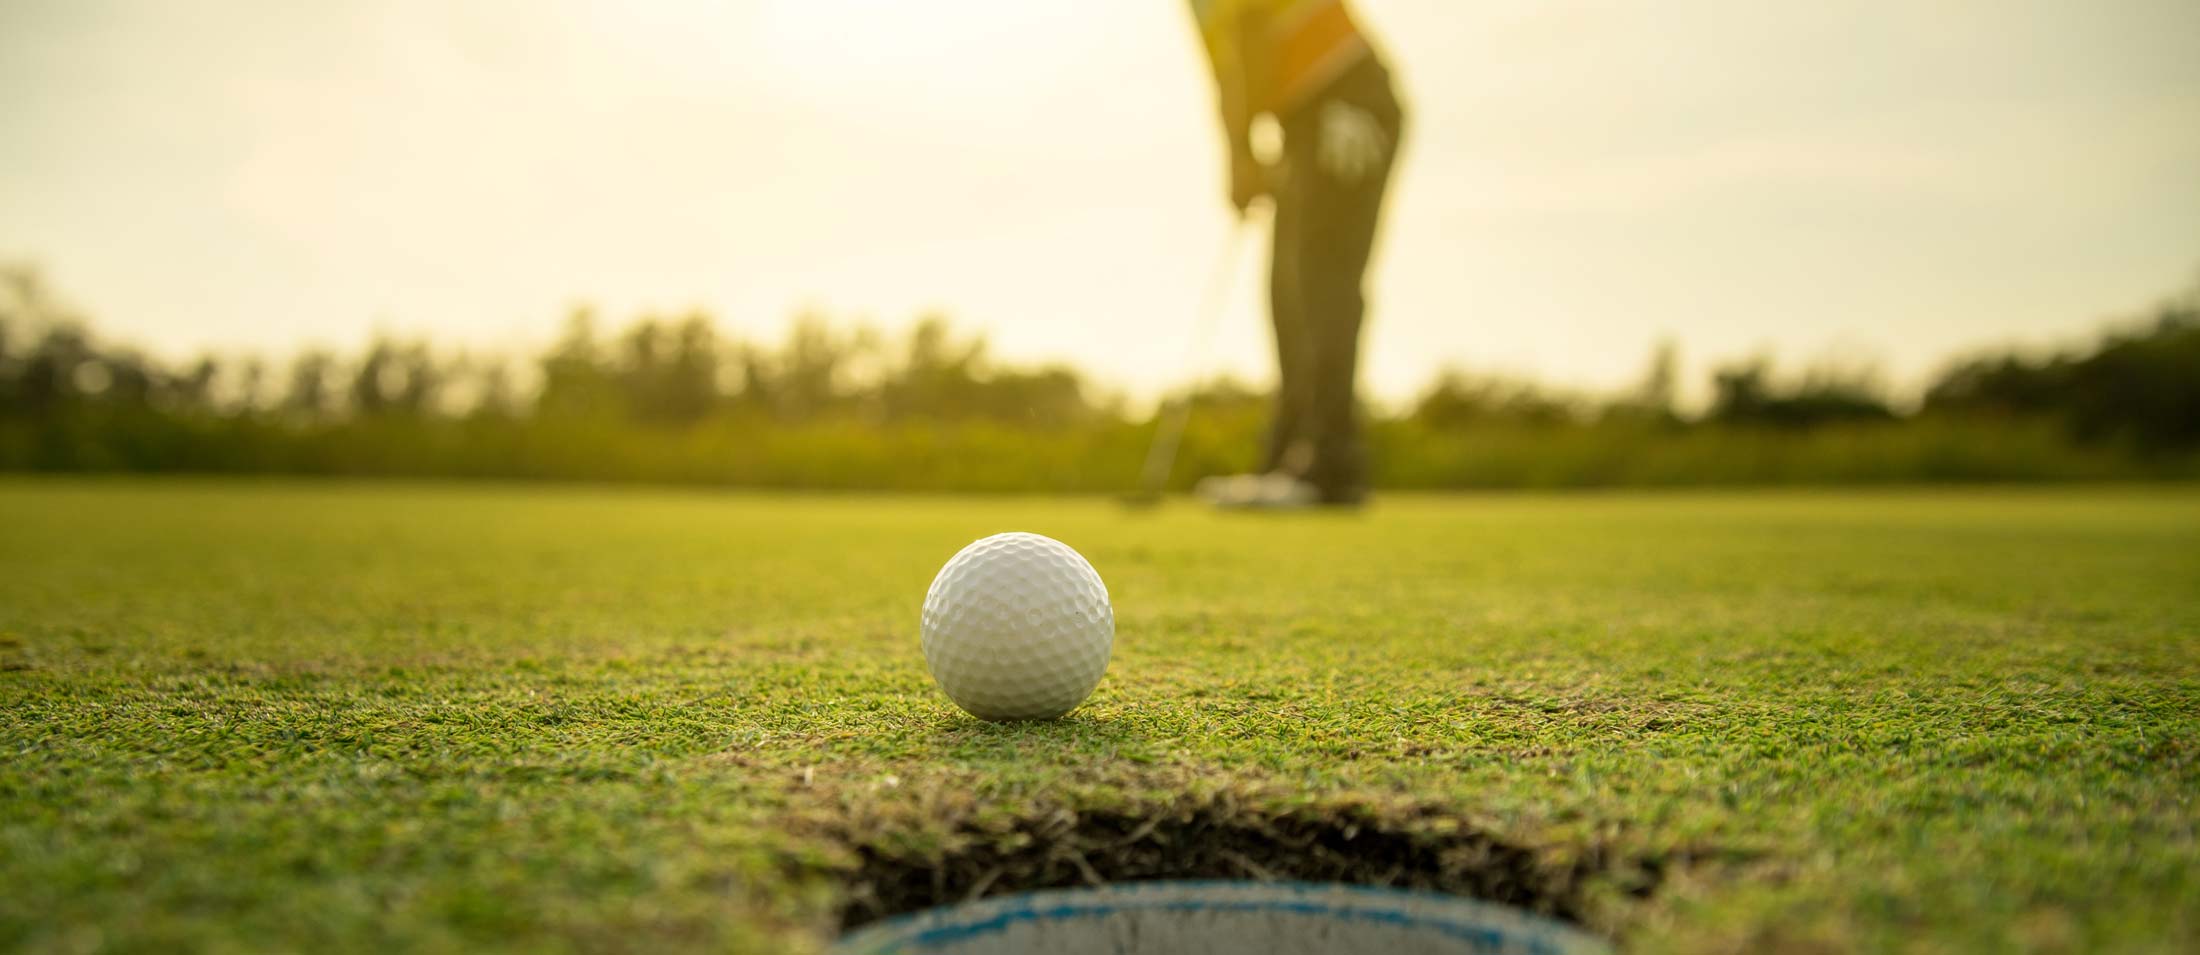 Is Golf a Sport or an Activity?